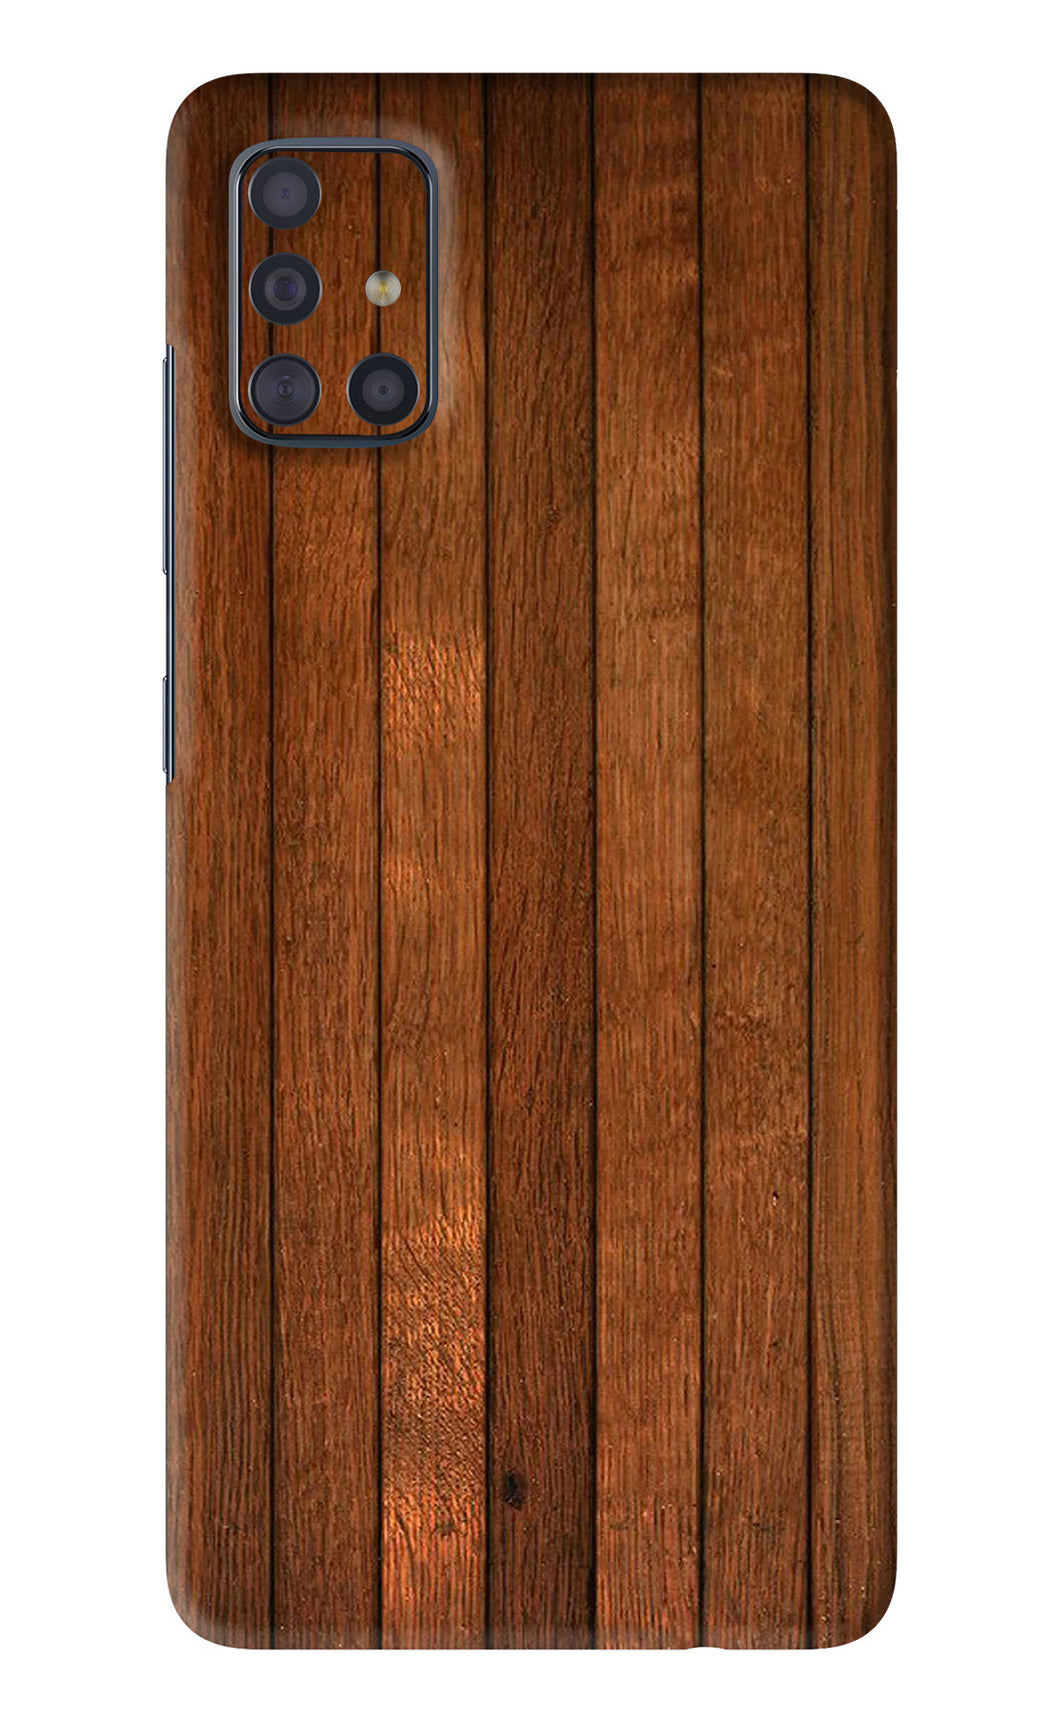 Wooden Artwork Bands Samsung Galaxy A51 Back Skin Wrap